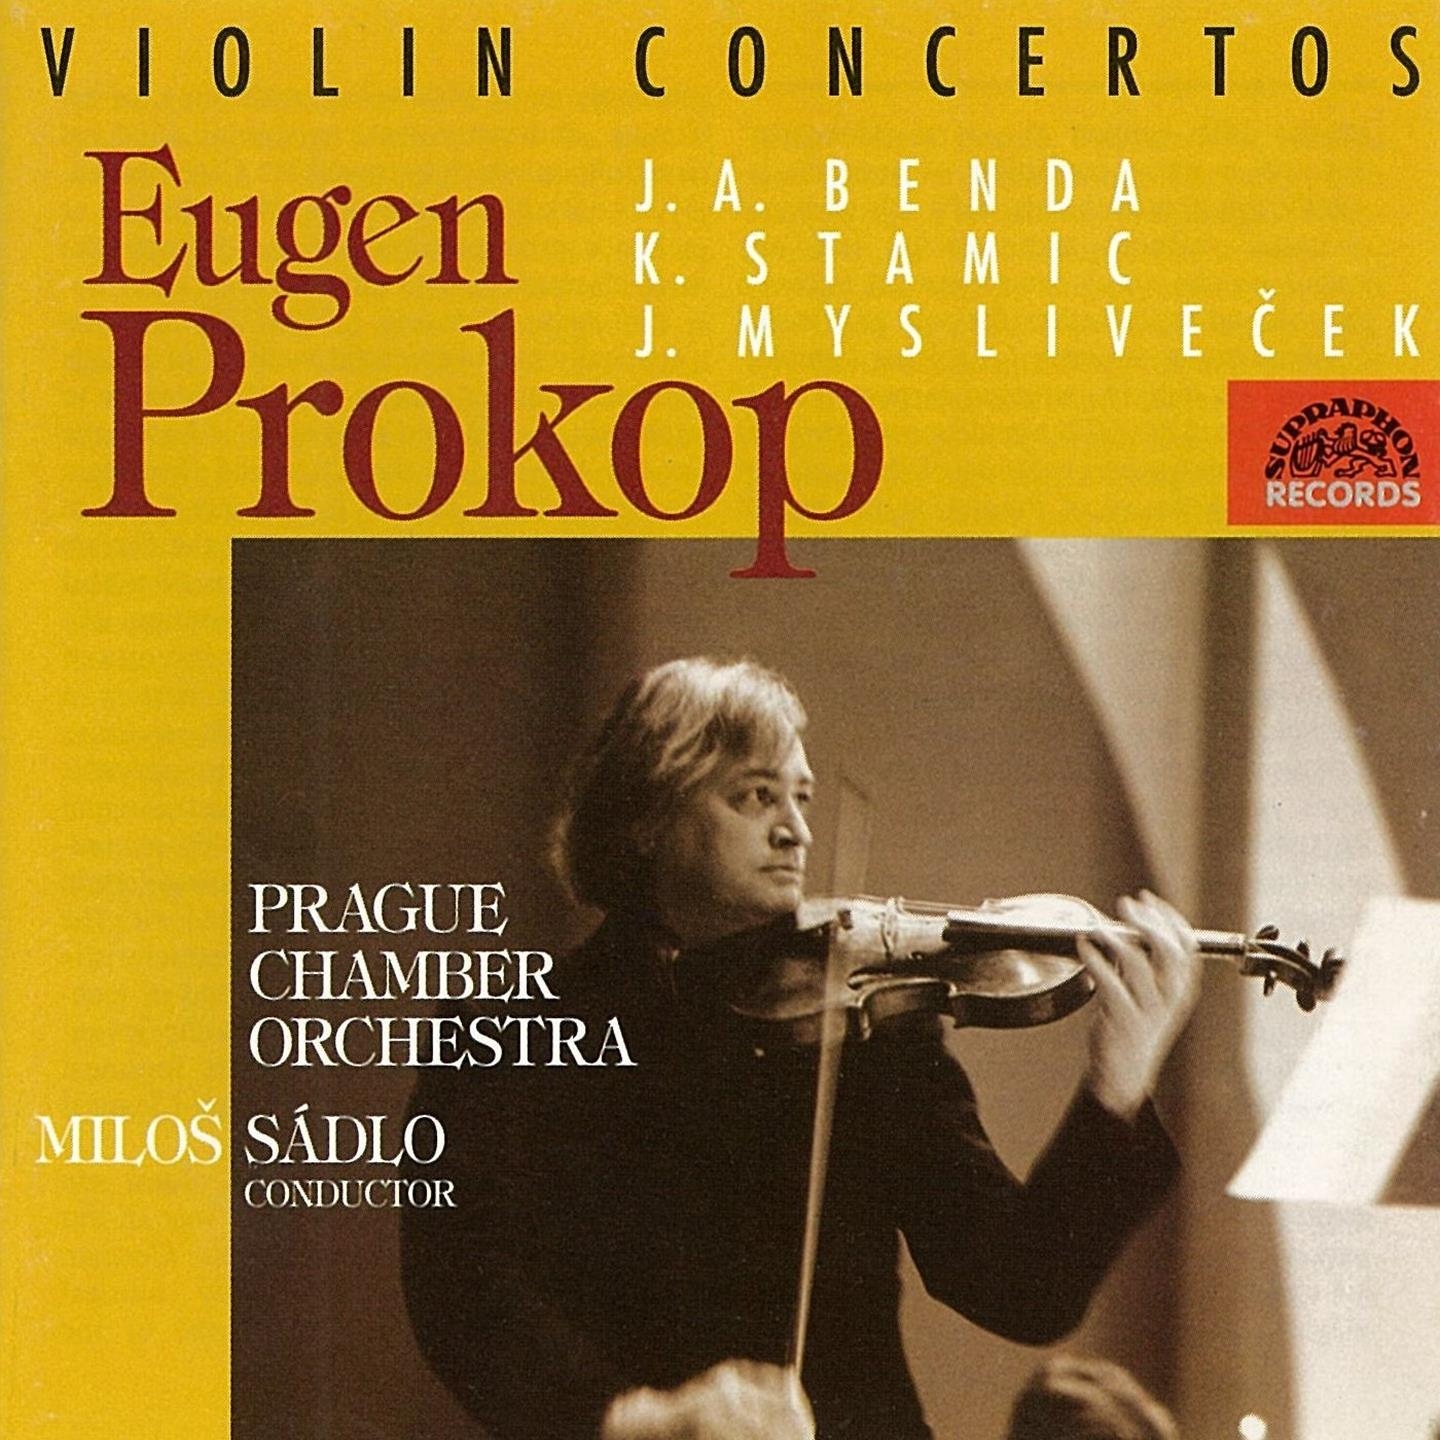 Concerto for Violin and Orchestra No. 4 in D-Sharp Major, .: III. Rondo